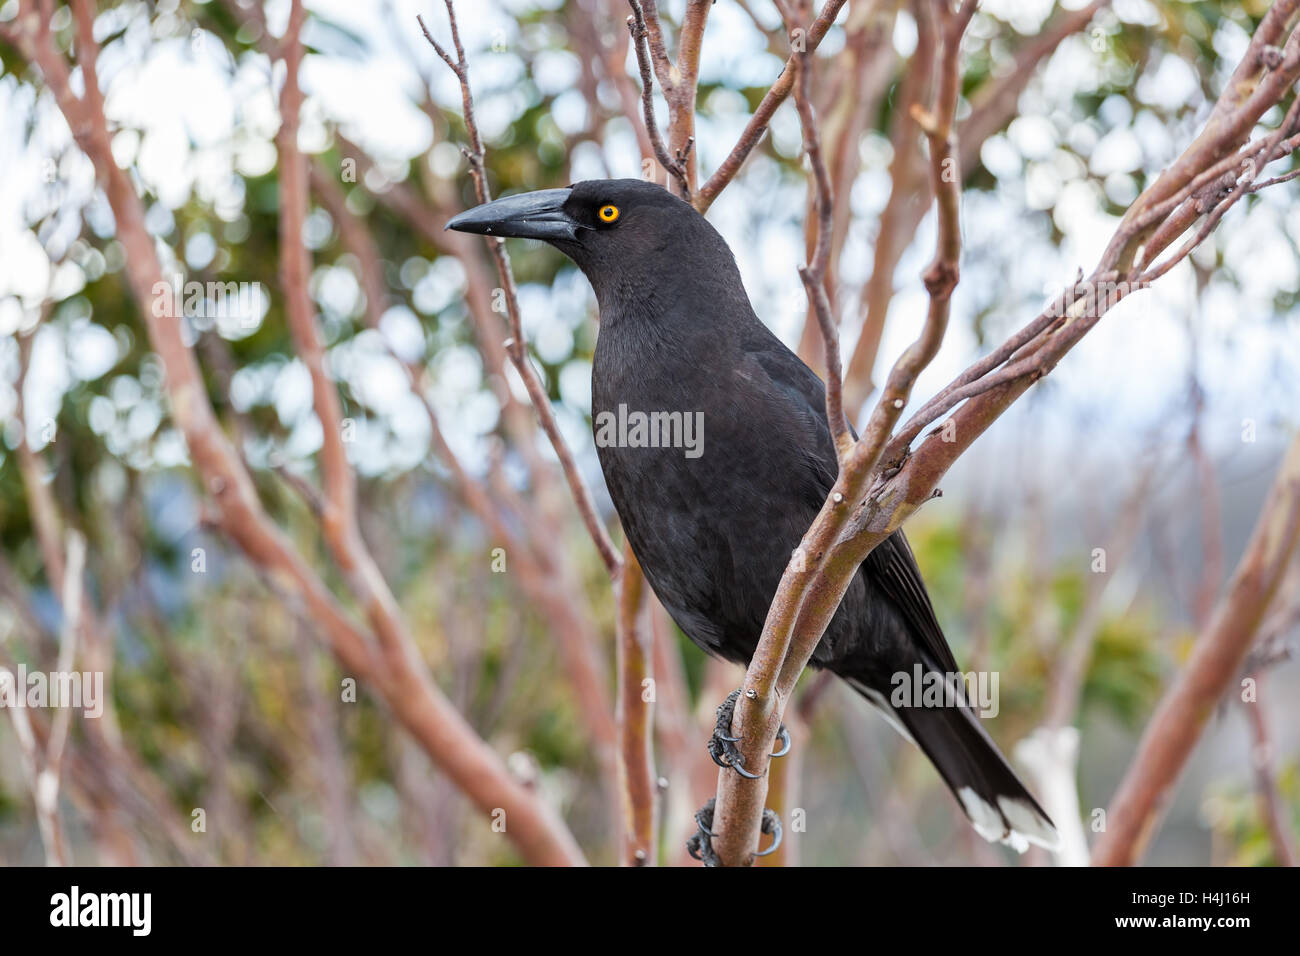 Black Currawong portrait - native Tasmanian bird. Cradle Mountain National Park, Tasmania, Australia. Stock Photo